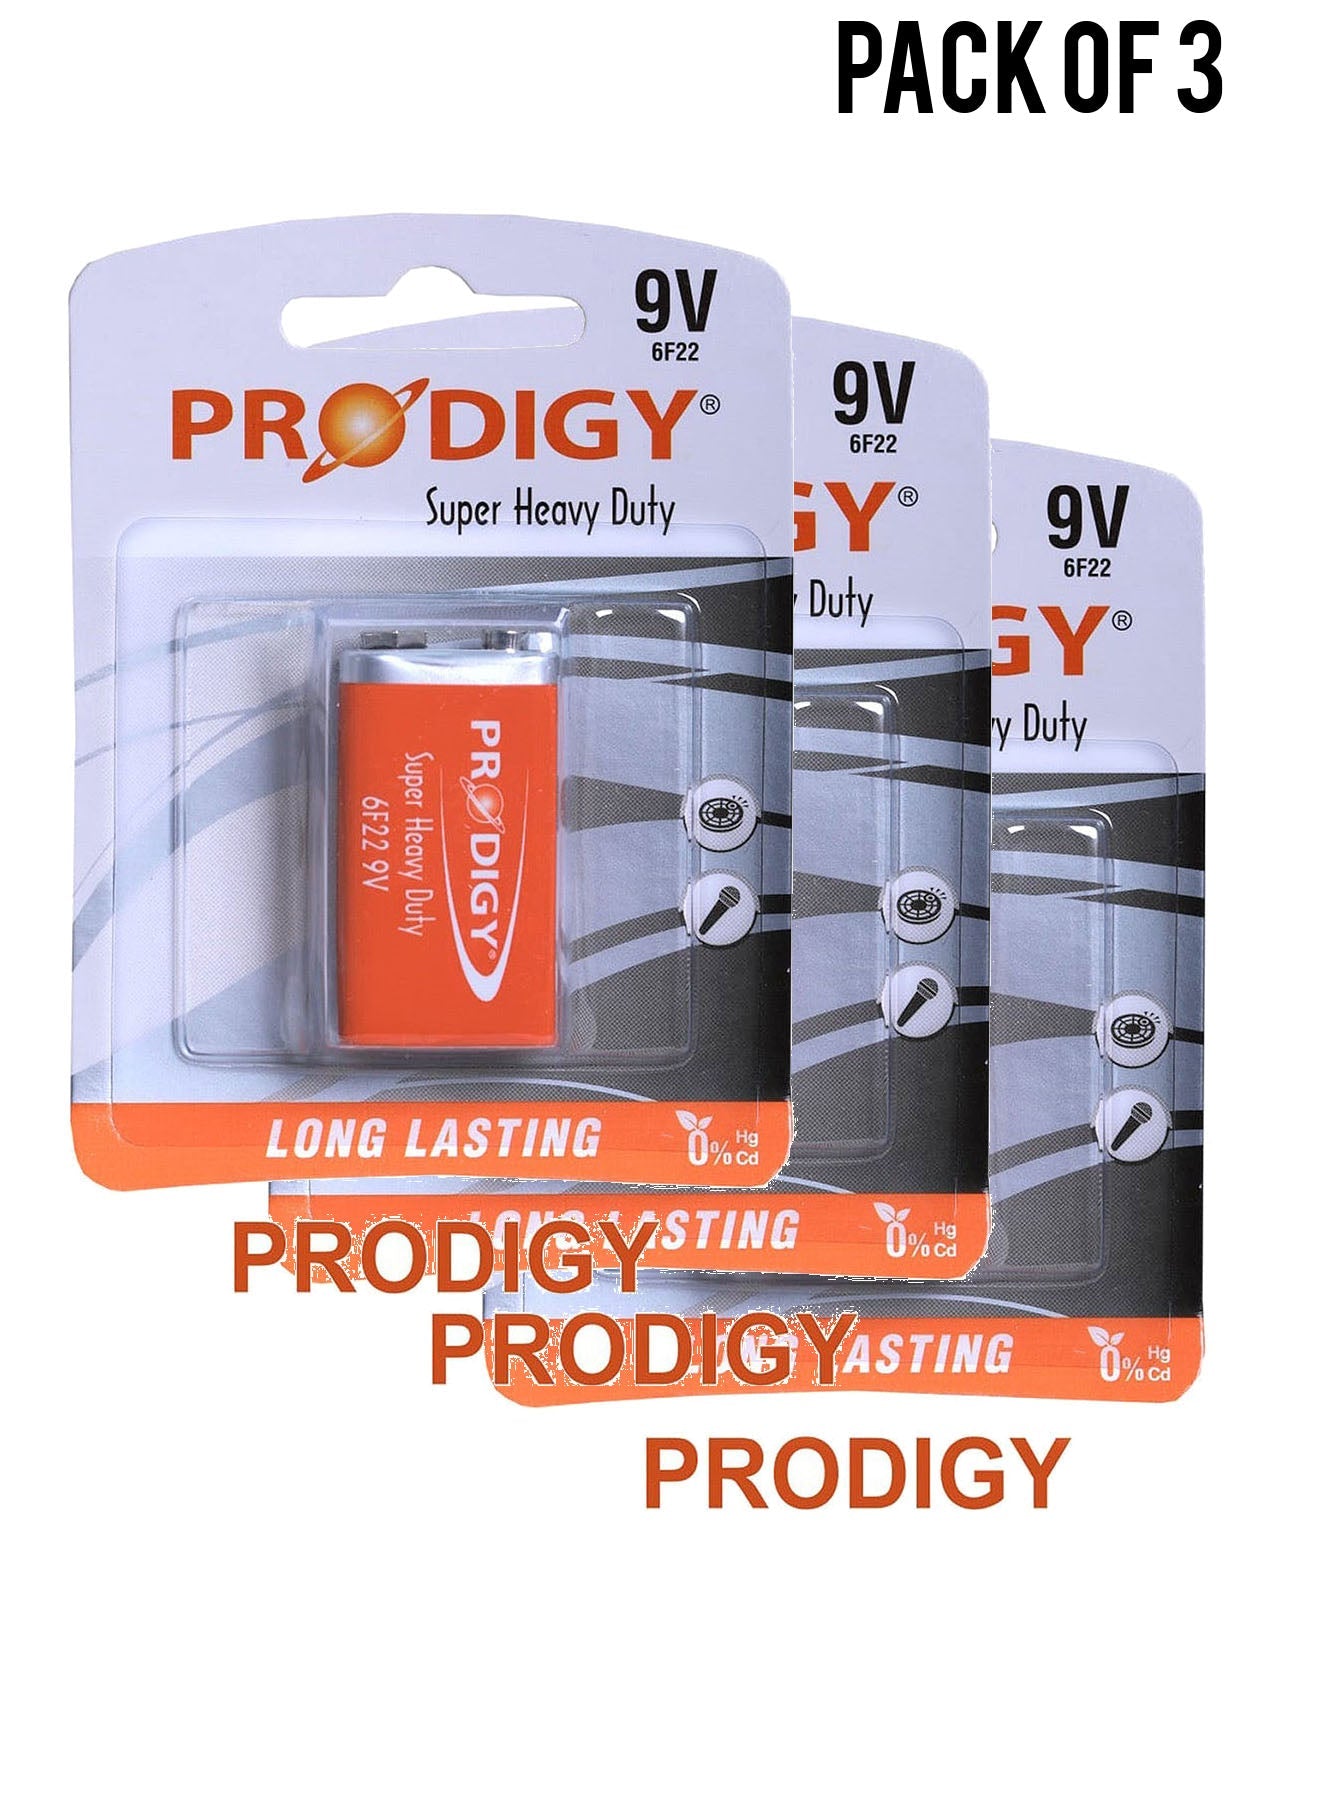 Prodigy Super Heavy Duty 6F22PVC 9V Value Pack of 3 